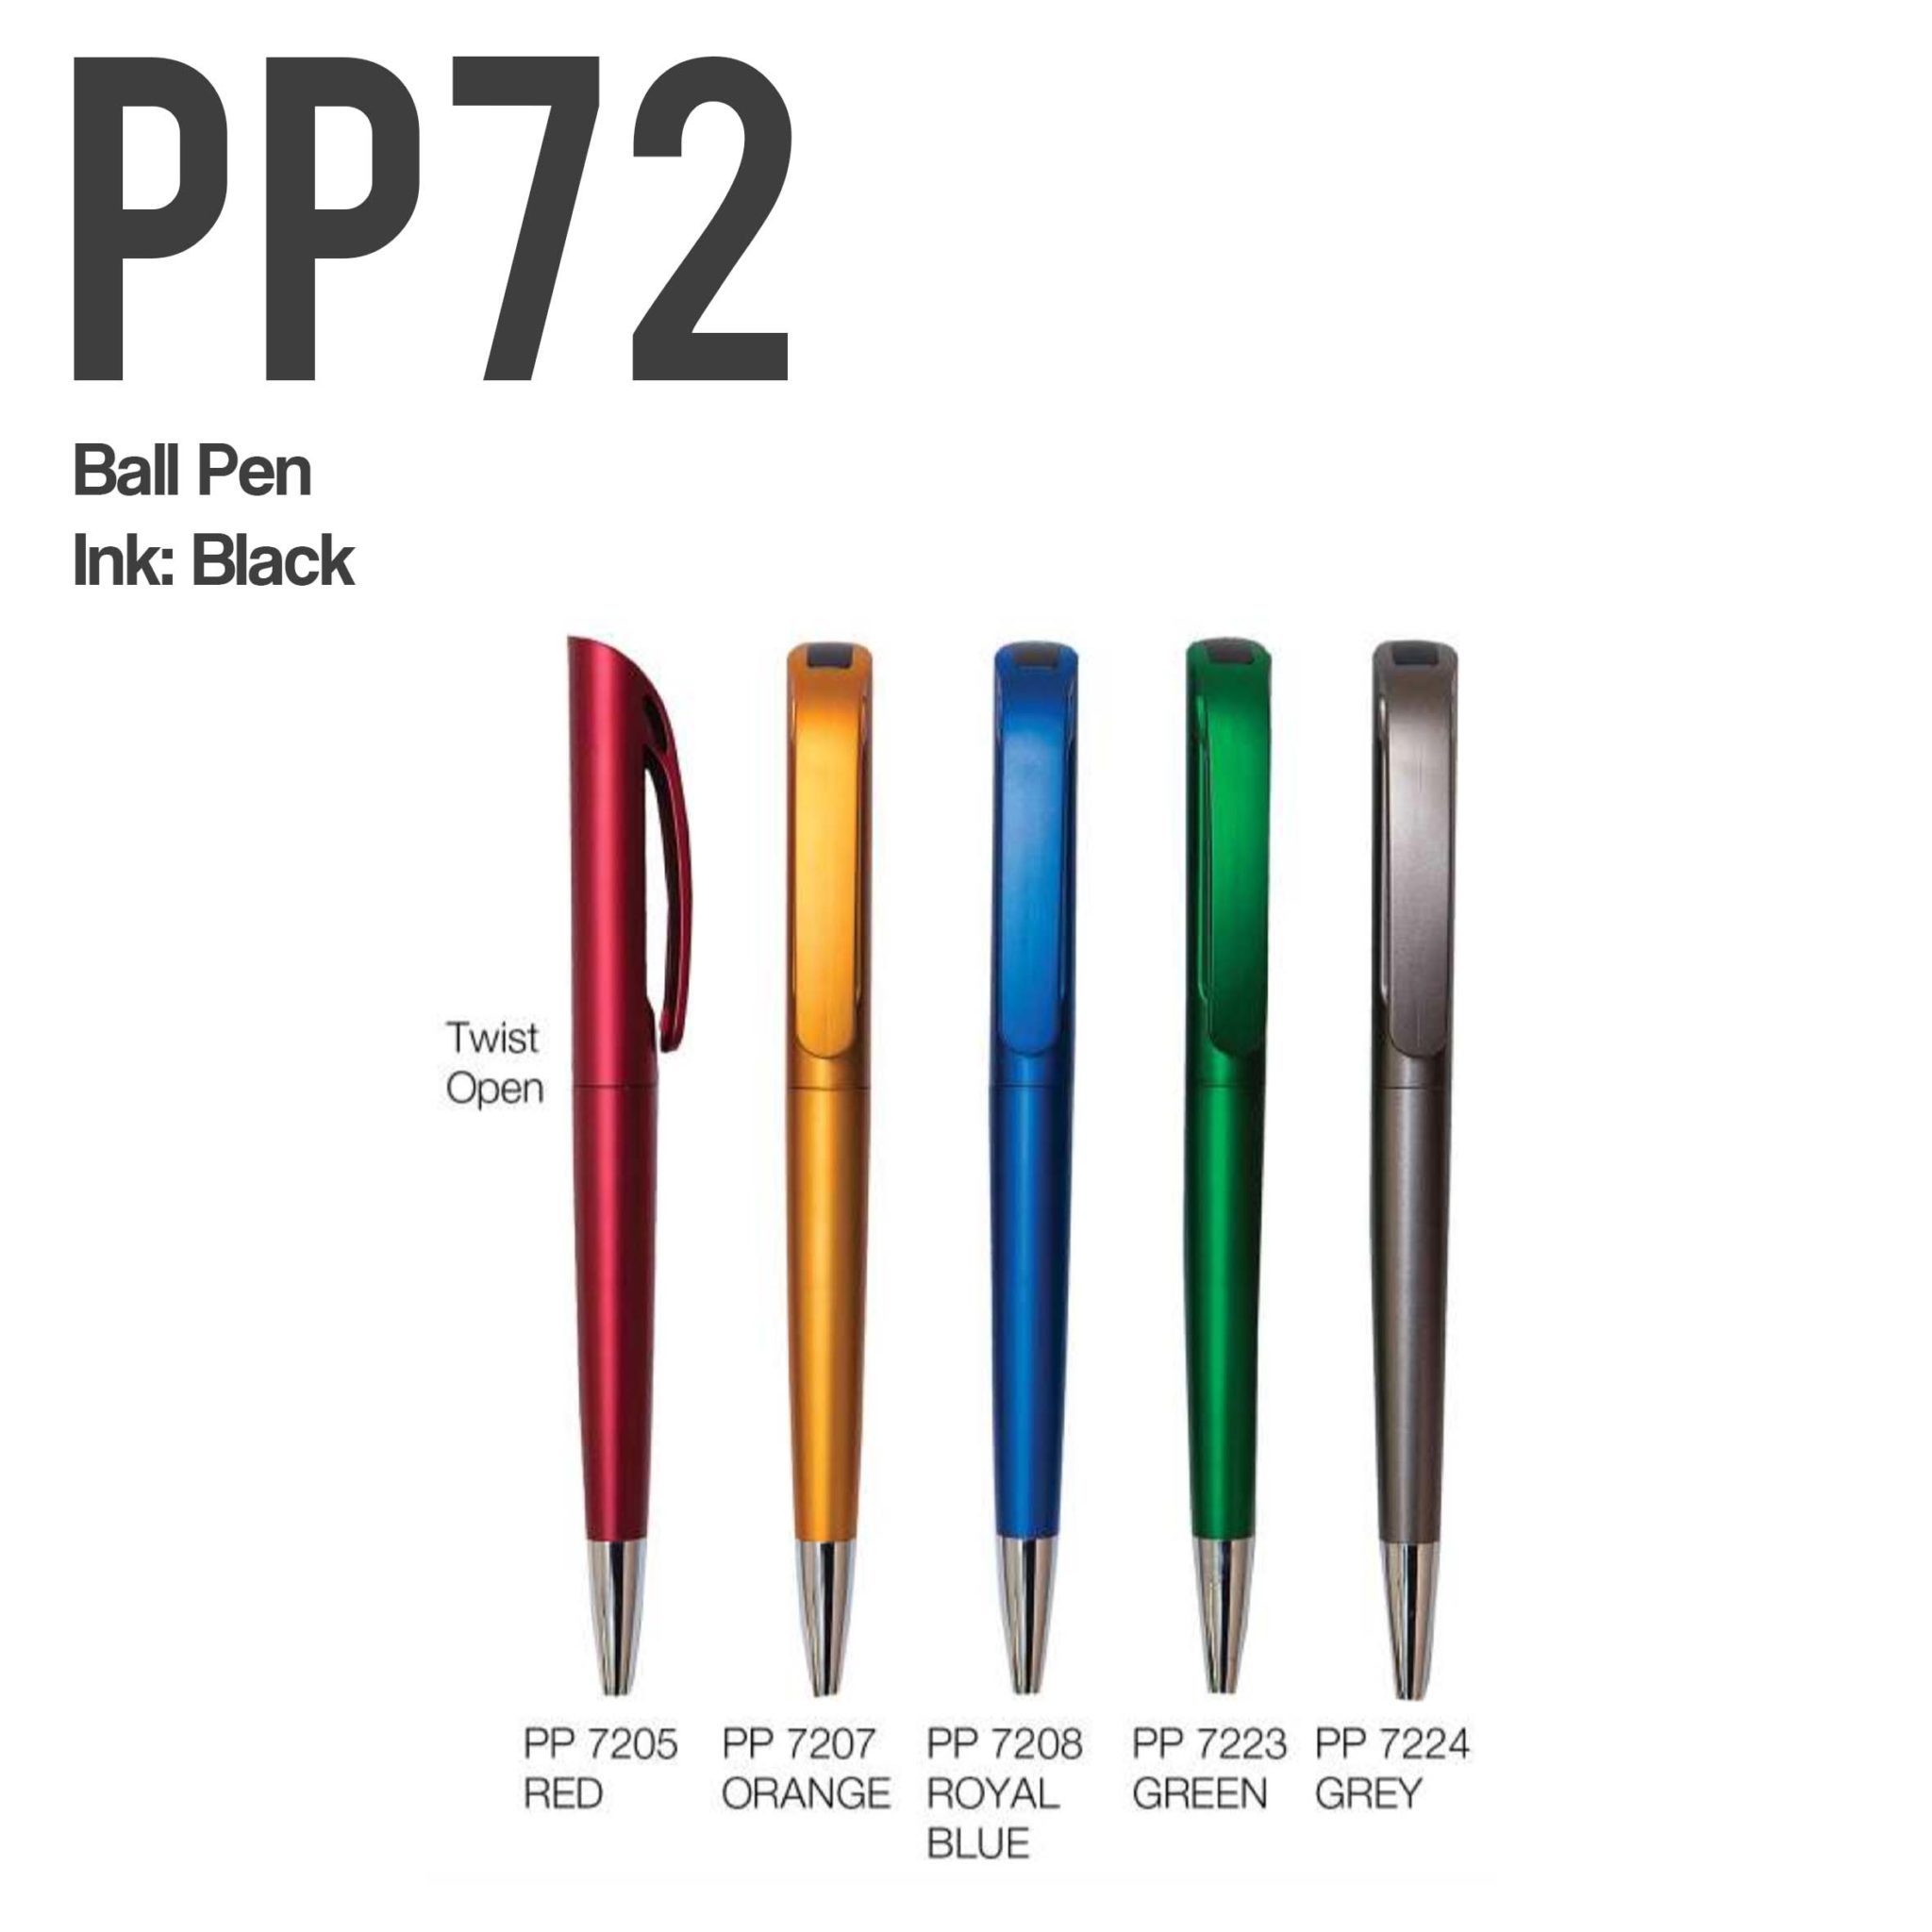 PP72 plastic pen scaled